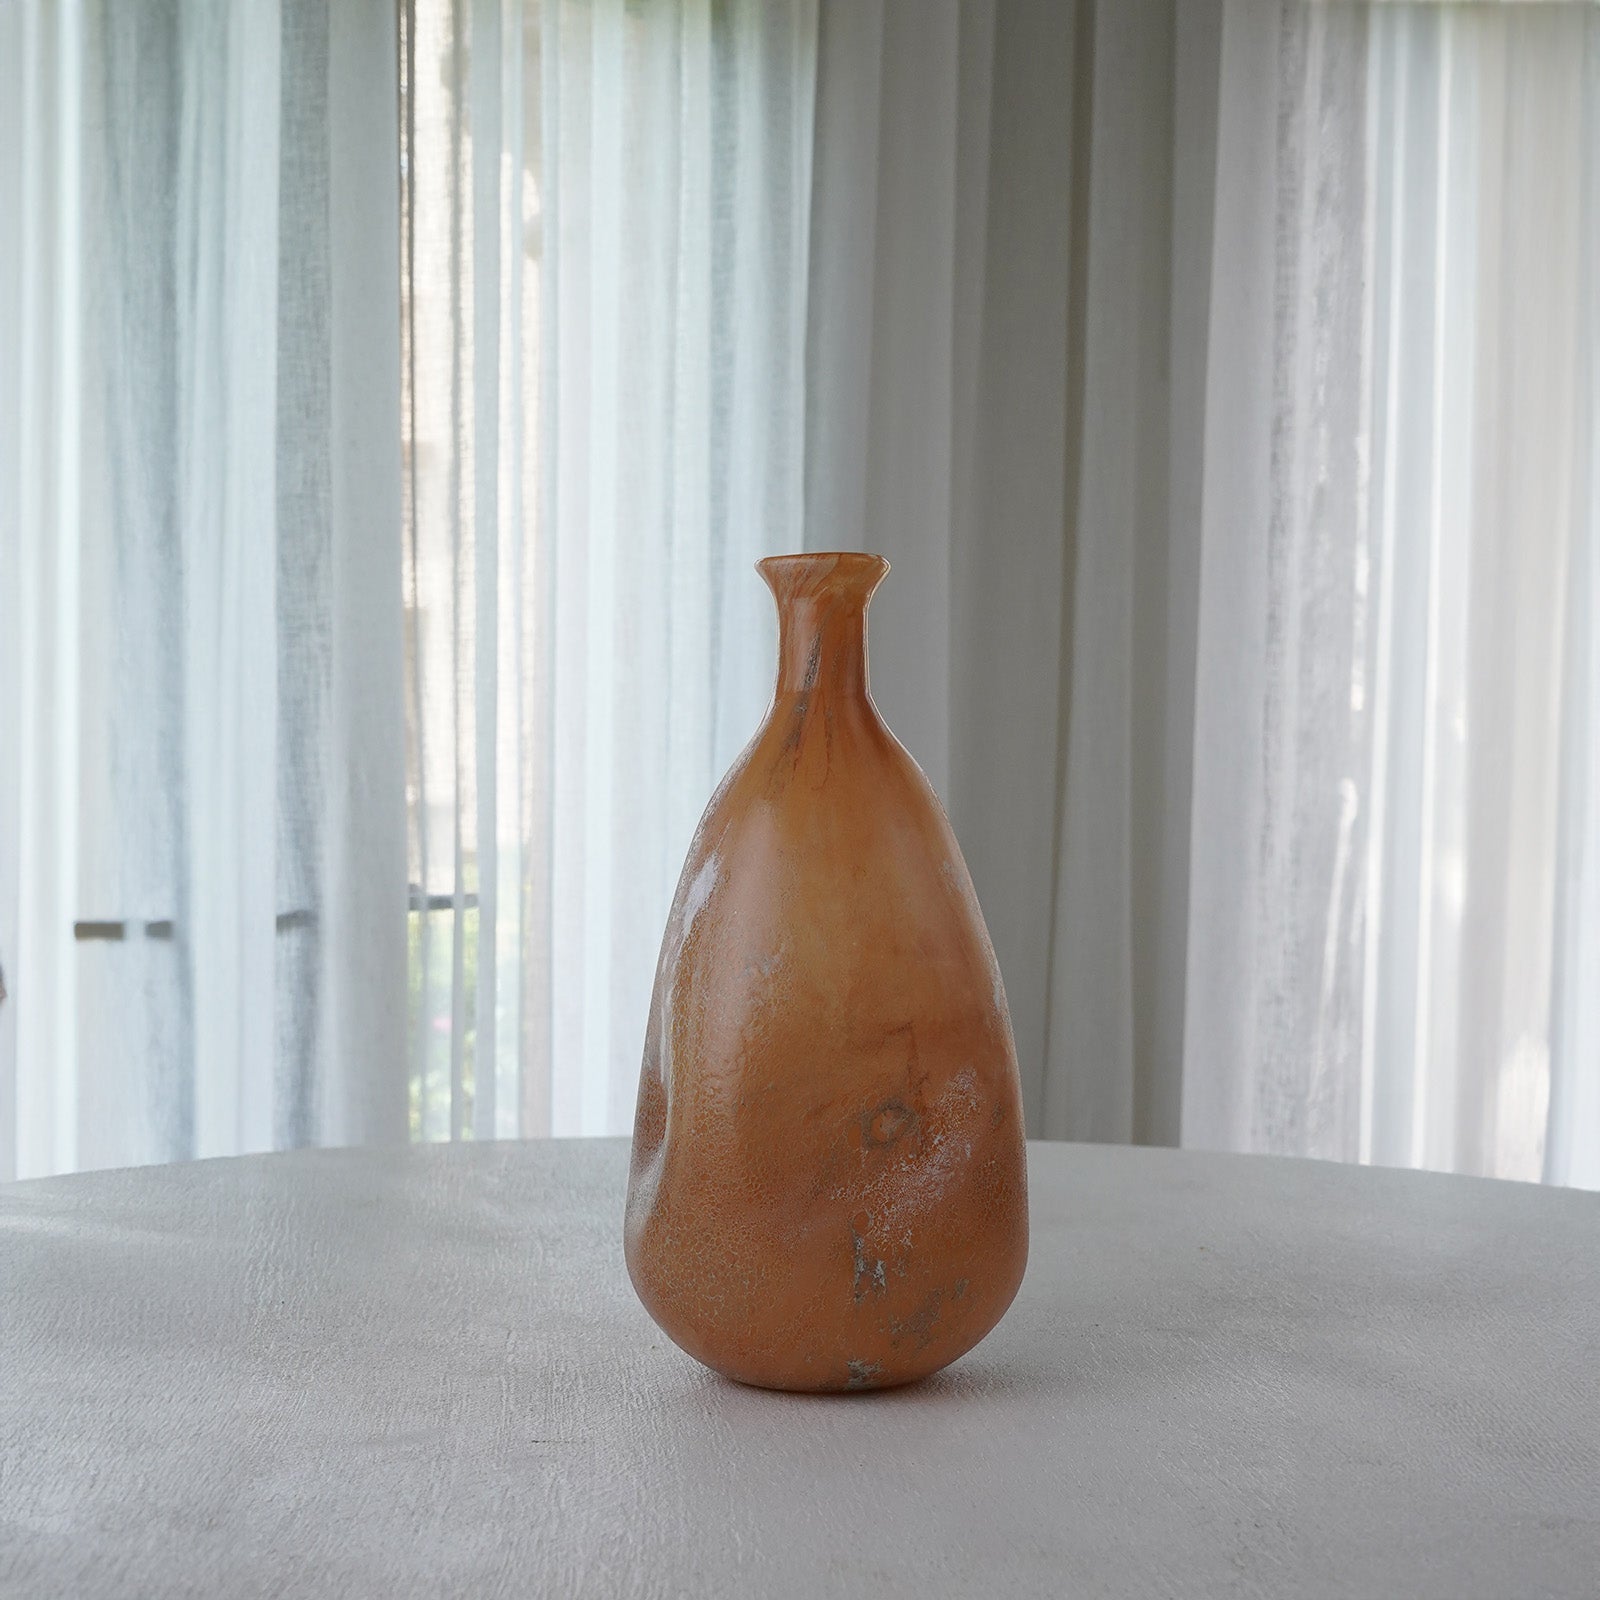 Peach and Cream Decorative Glass Vase Open Top  - WS Living - UAE - Vase Wood and steel Furnitures - Dubai